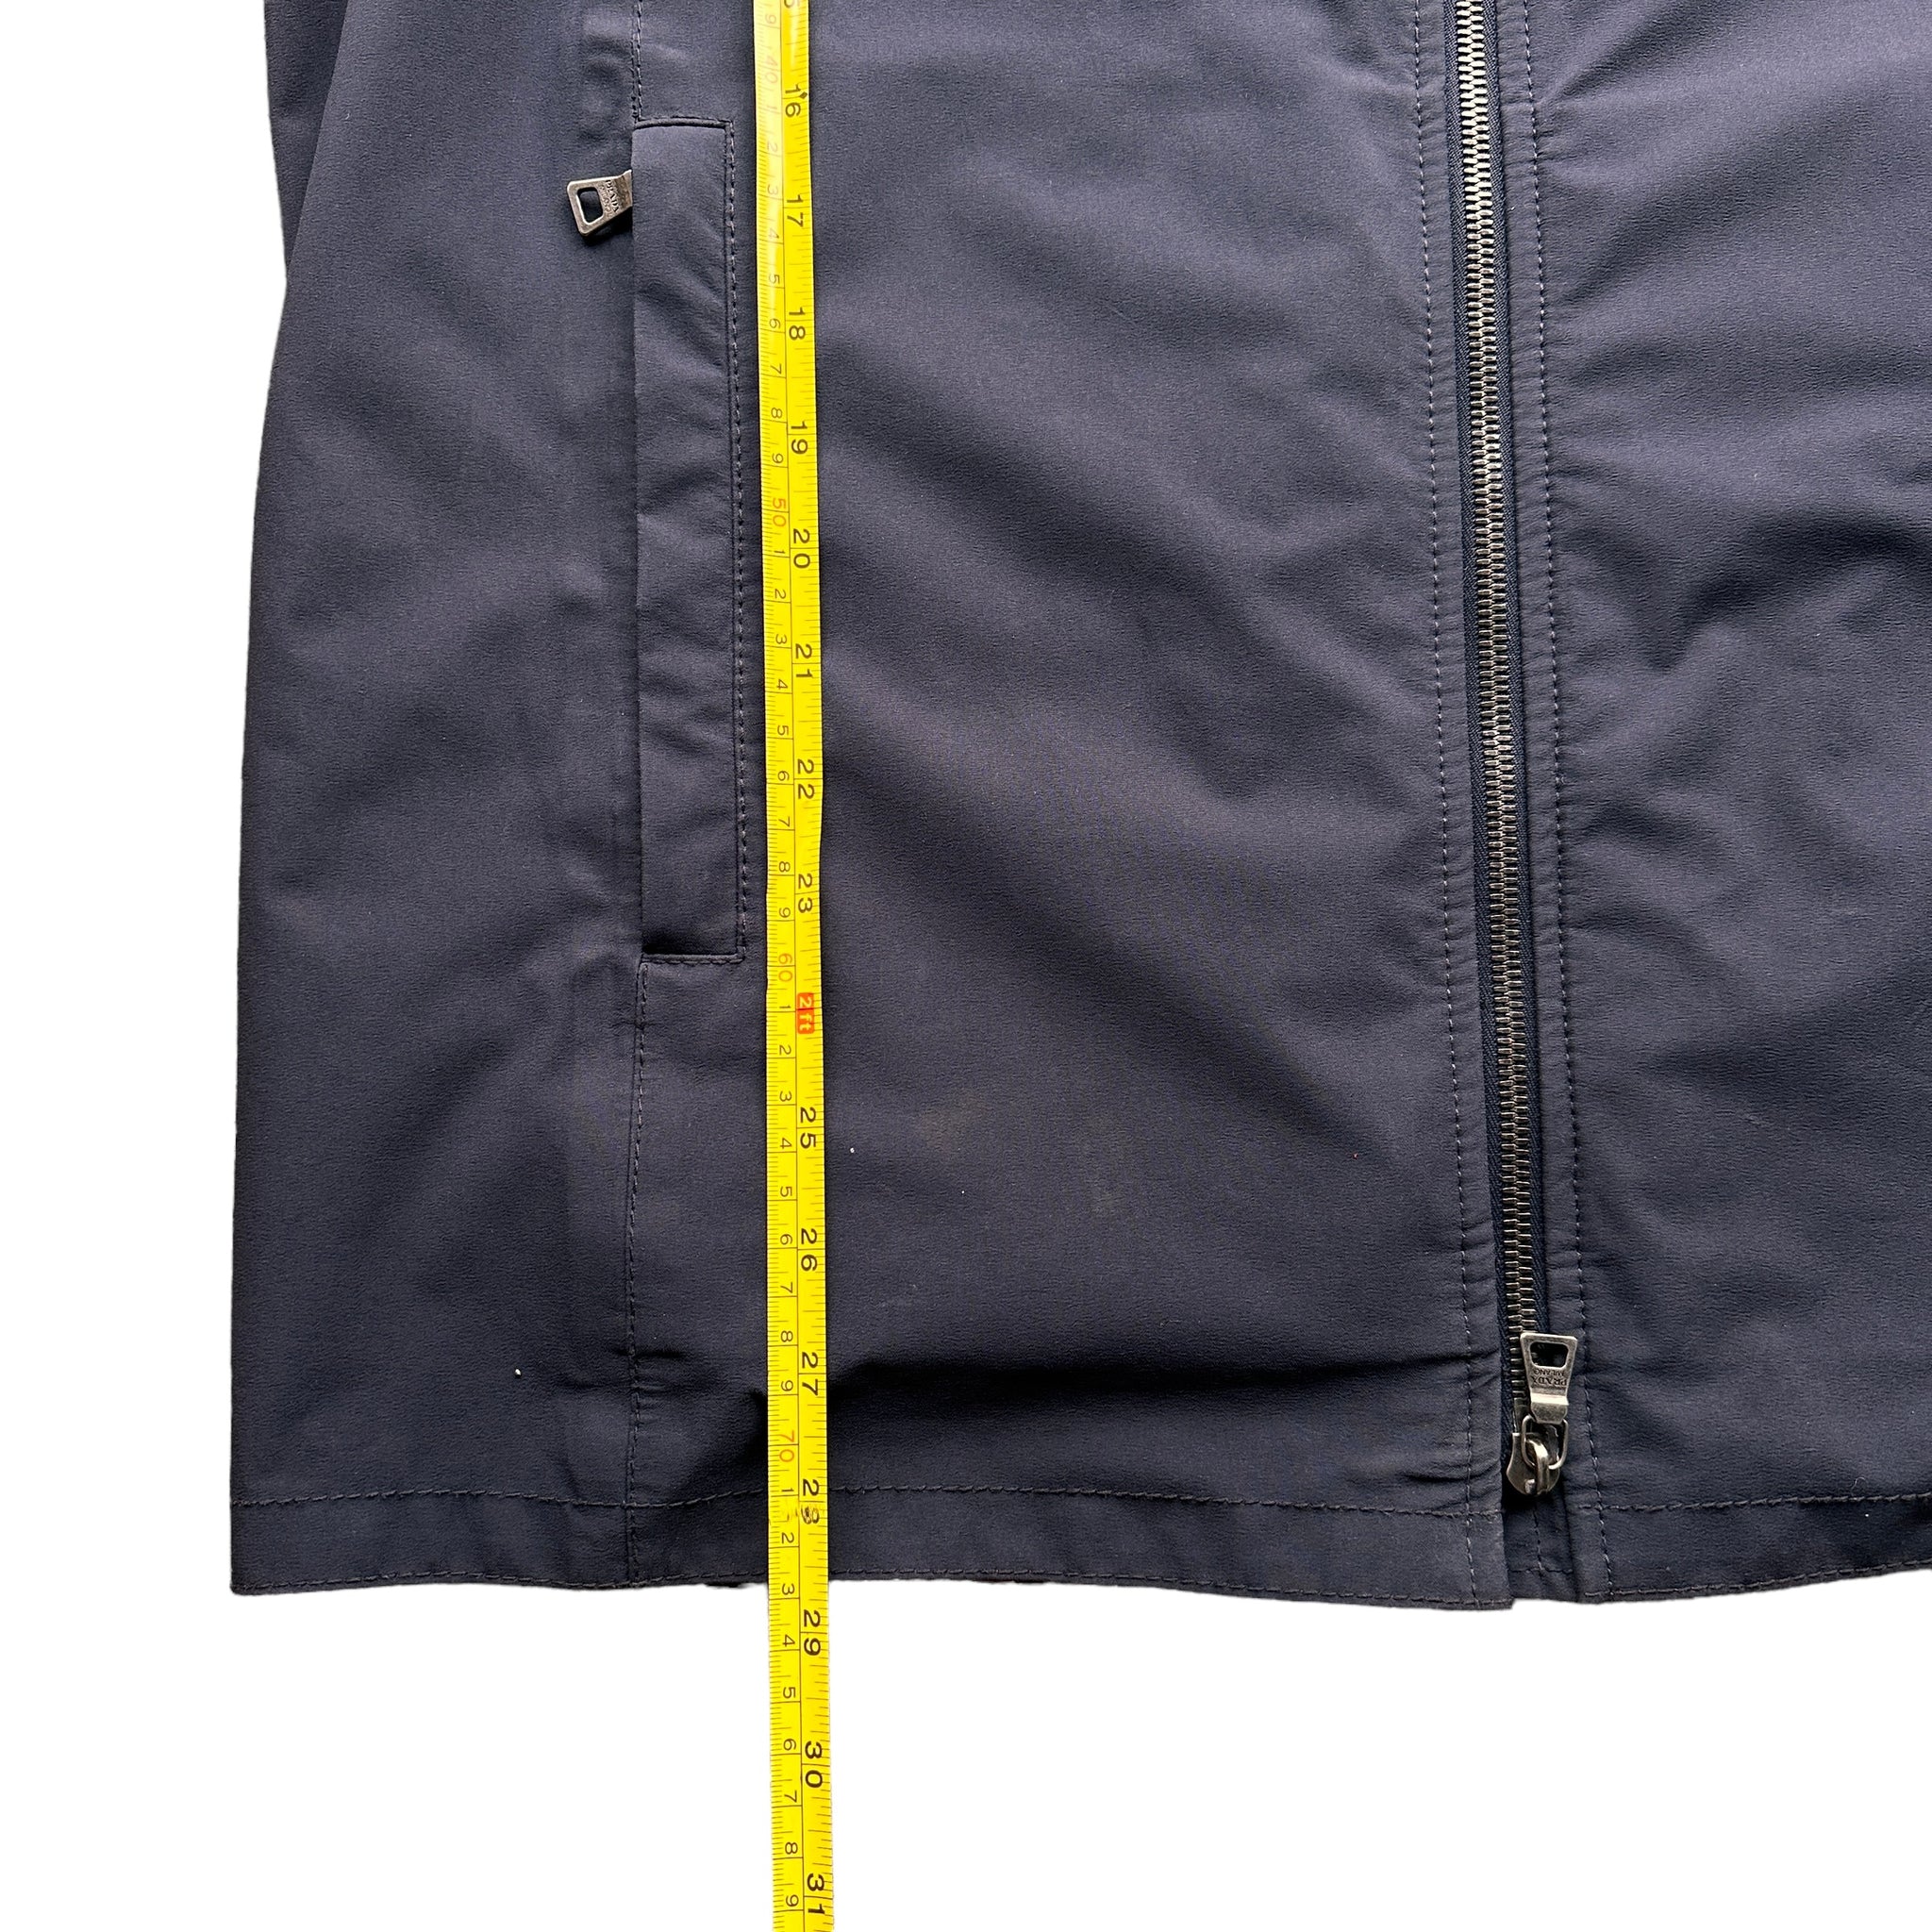 90s Prada goretex jacket Large